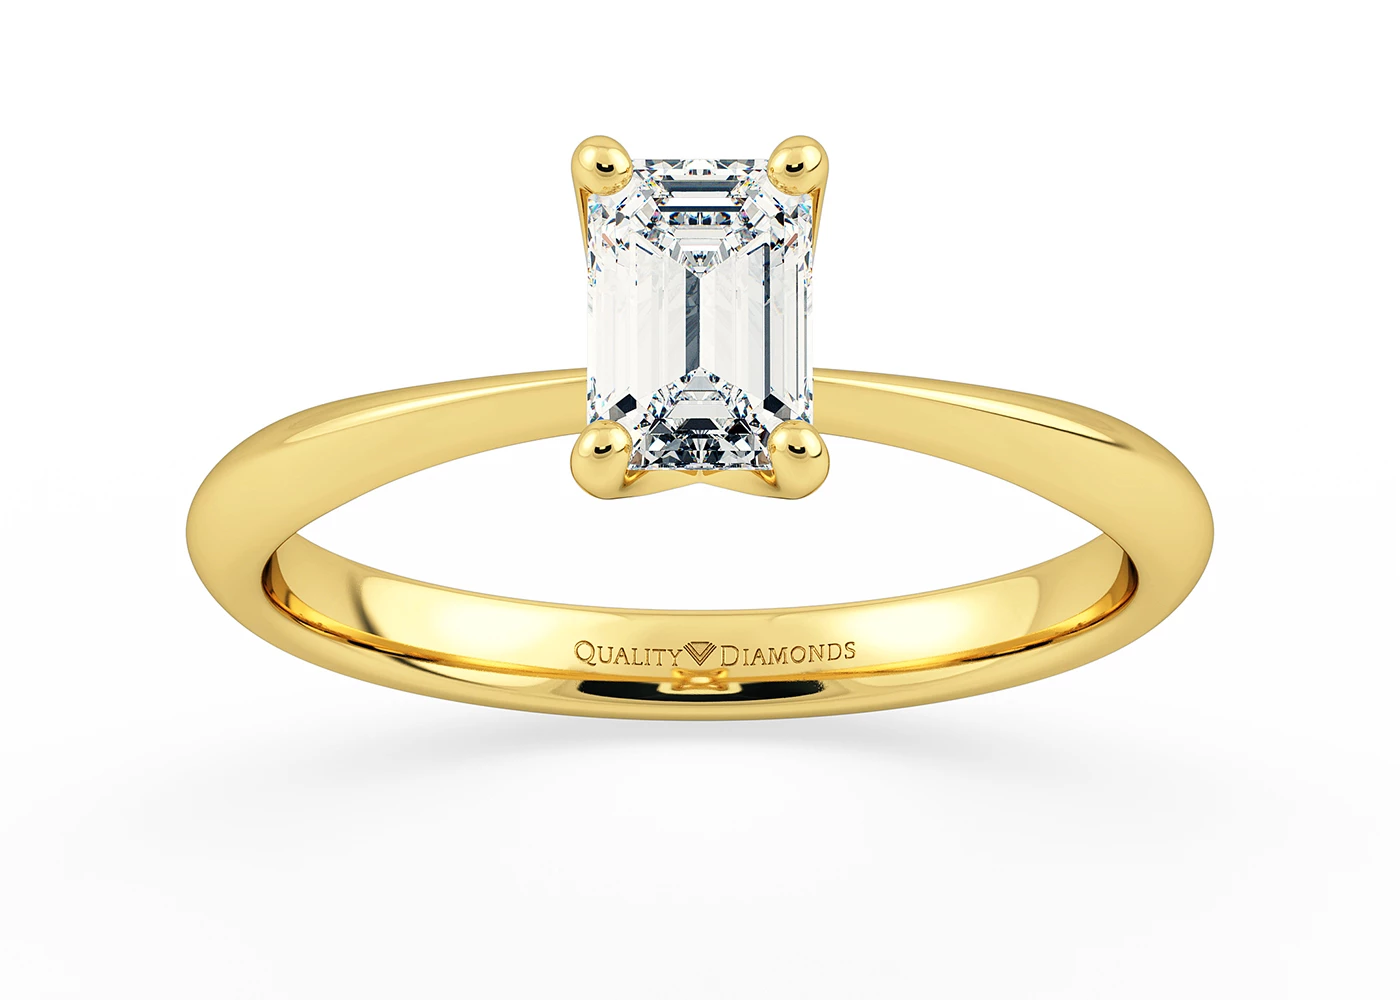 Emerald Amorette Diamond Ring in 9K Yellow Gold